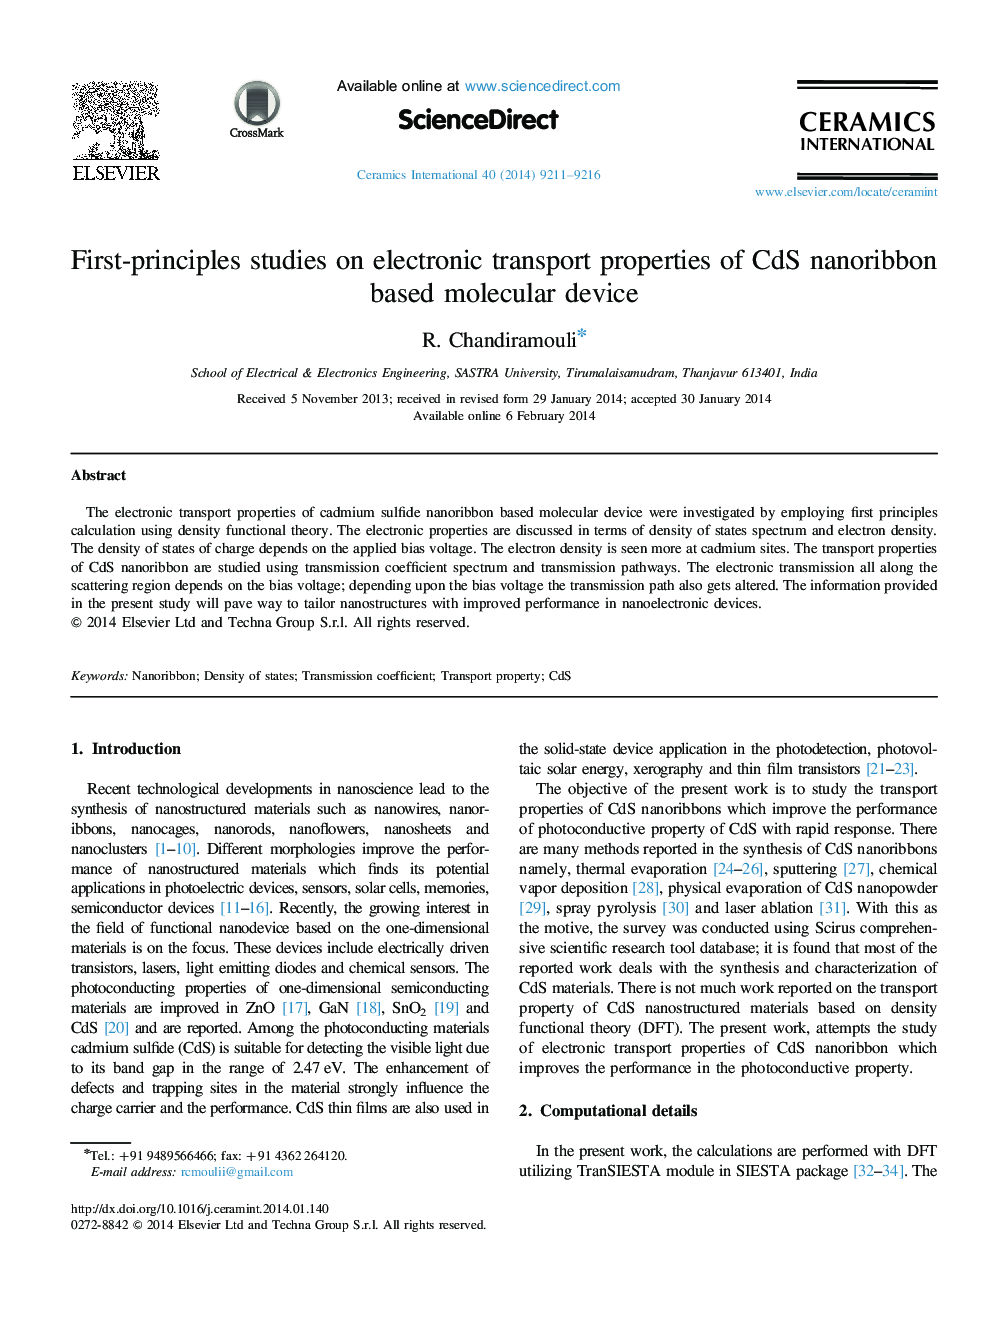 First-principles studies on electronic transport properties of CdS nanoribbon based molecular device